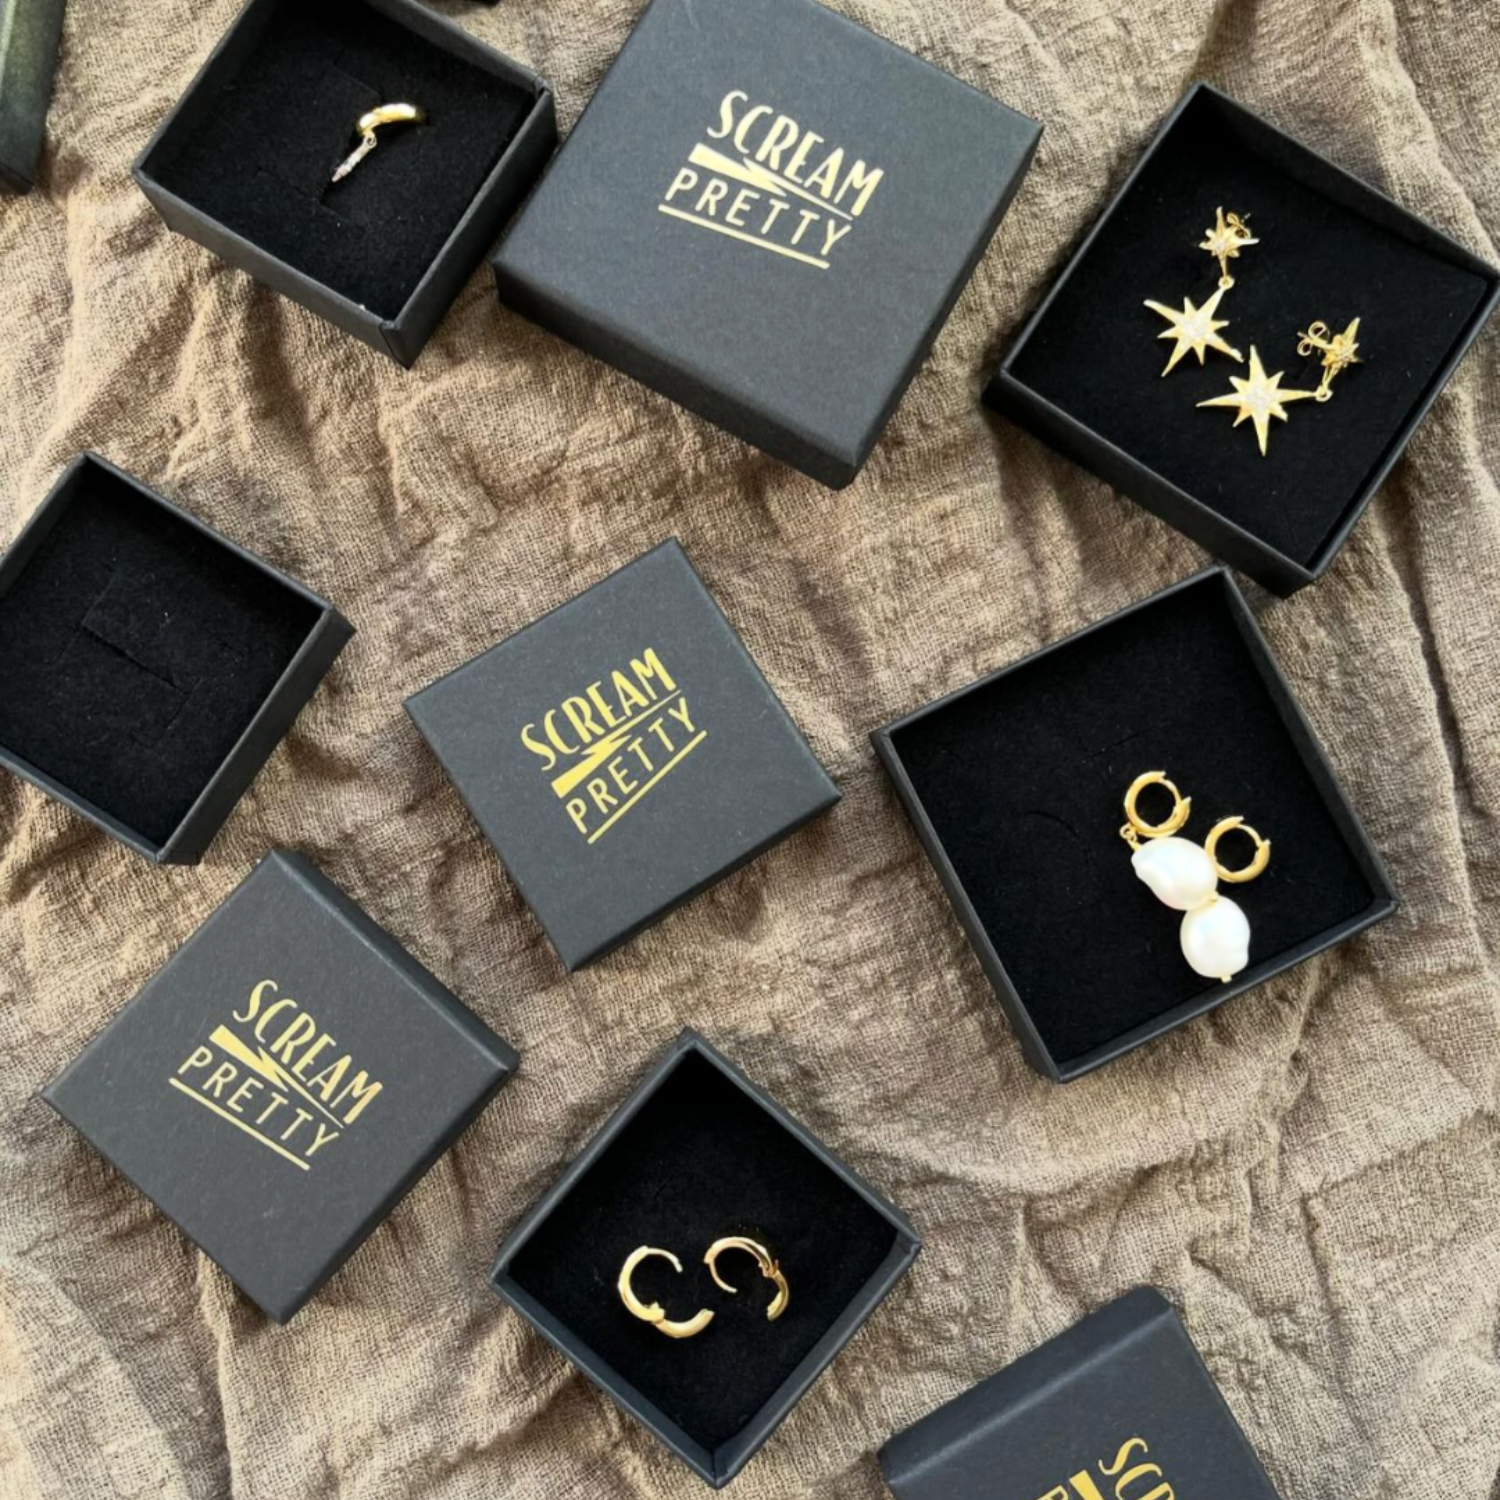 Jewellery Sample Sale by Scream Pretty